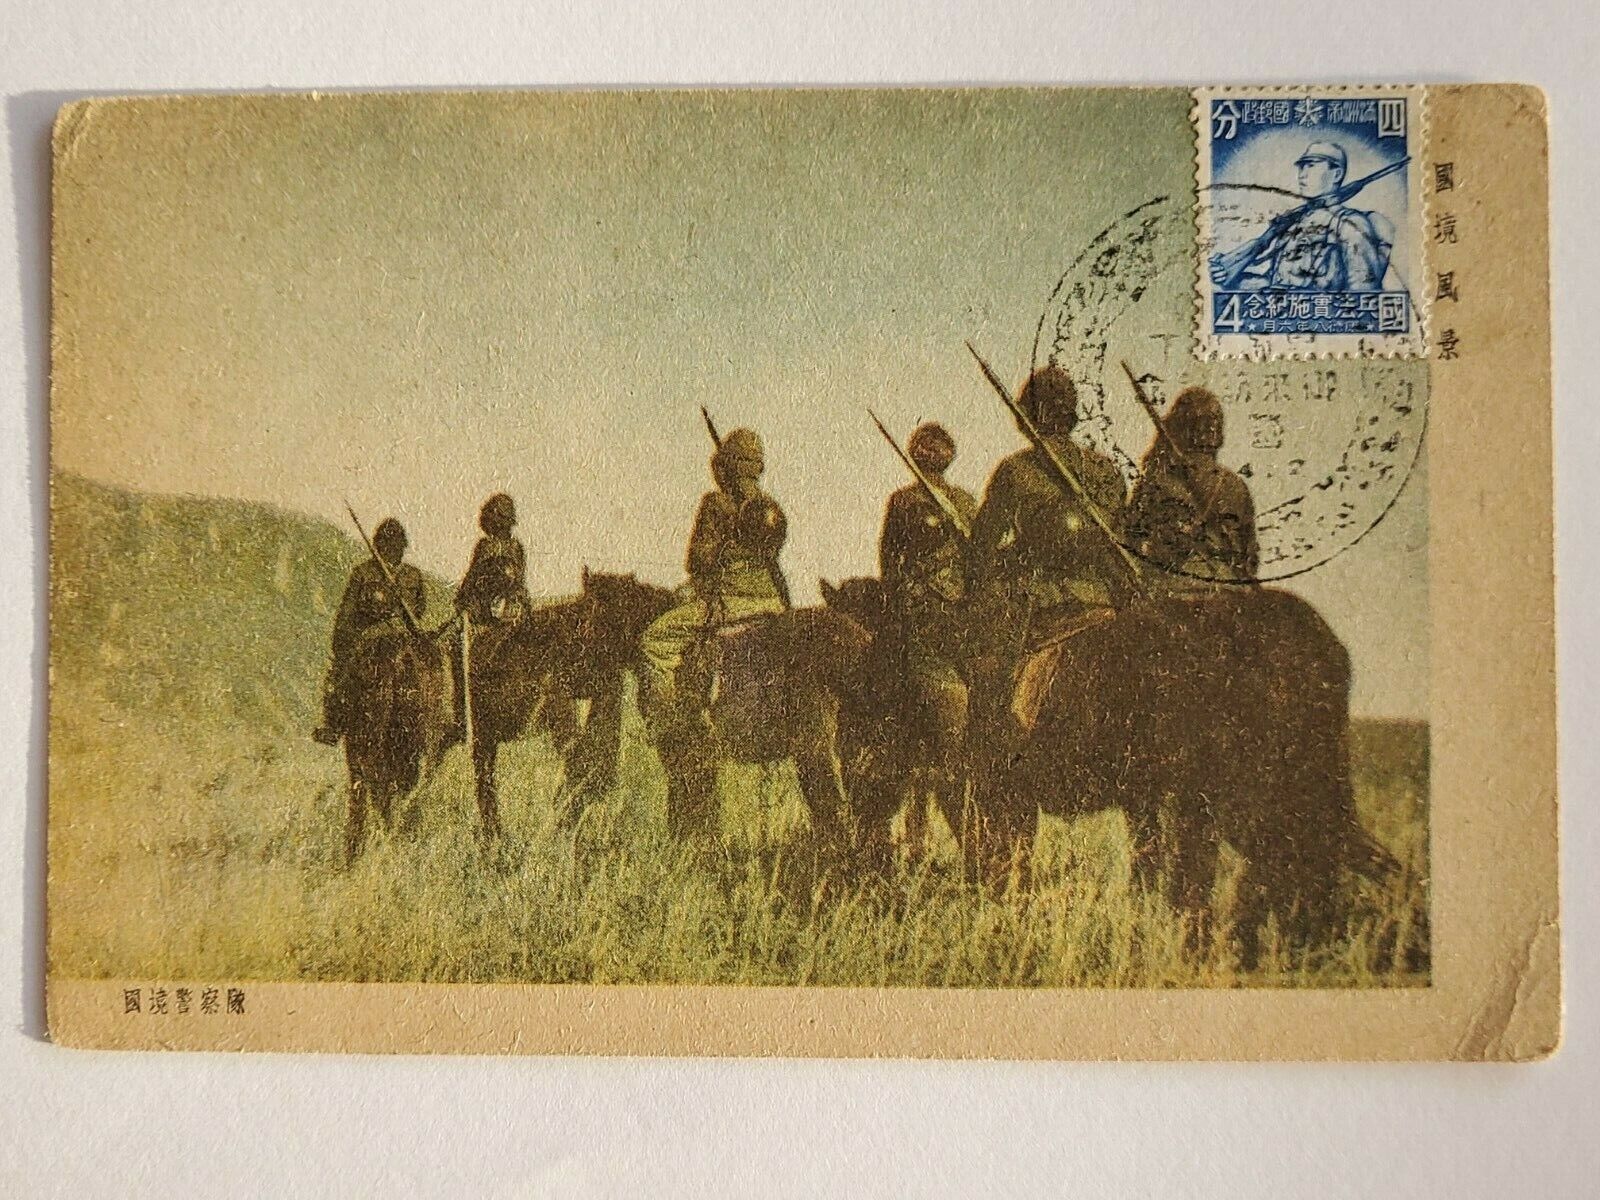 👍 1930s CHINA MANCHUKUO CAVALRY POLICE UNIT POSTCARD 满洲国警察马队国兵法实施纪念邮票